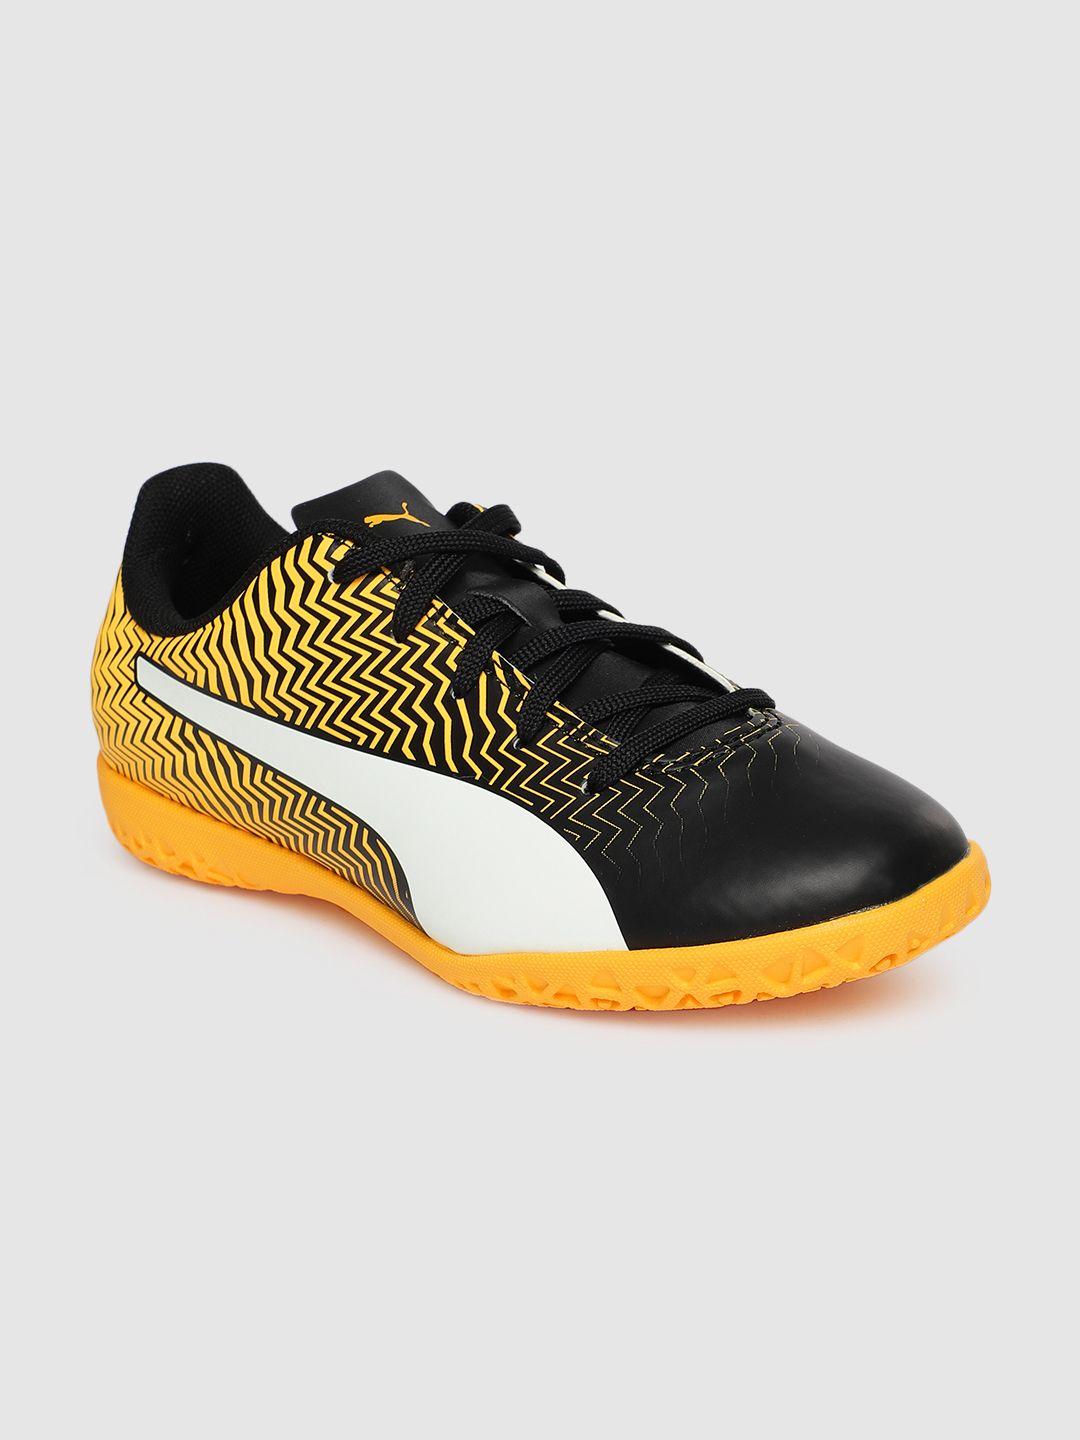 puma unisex yellow rapido ii it youth football shoes